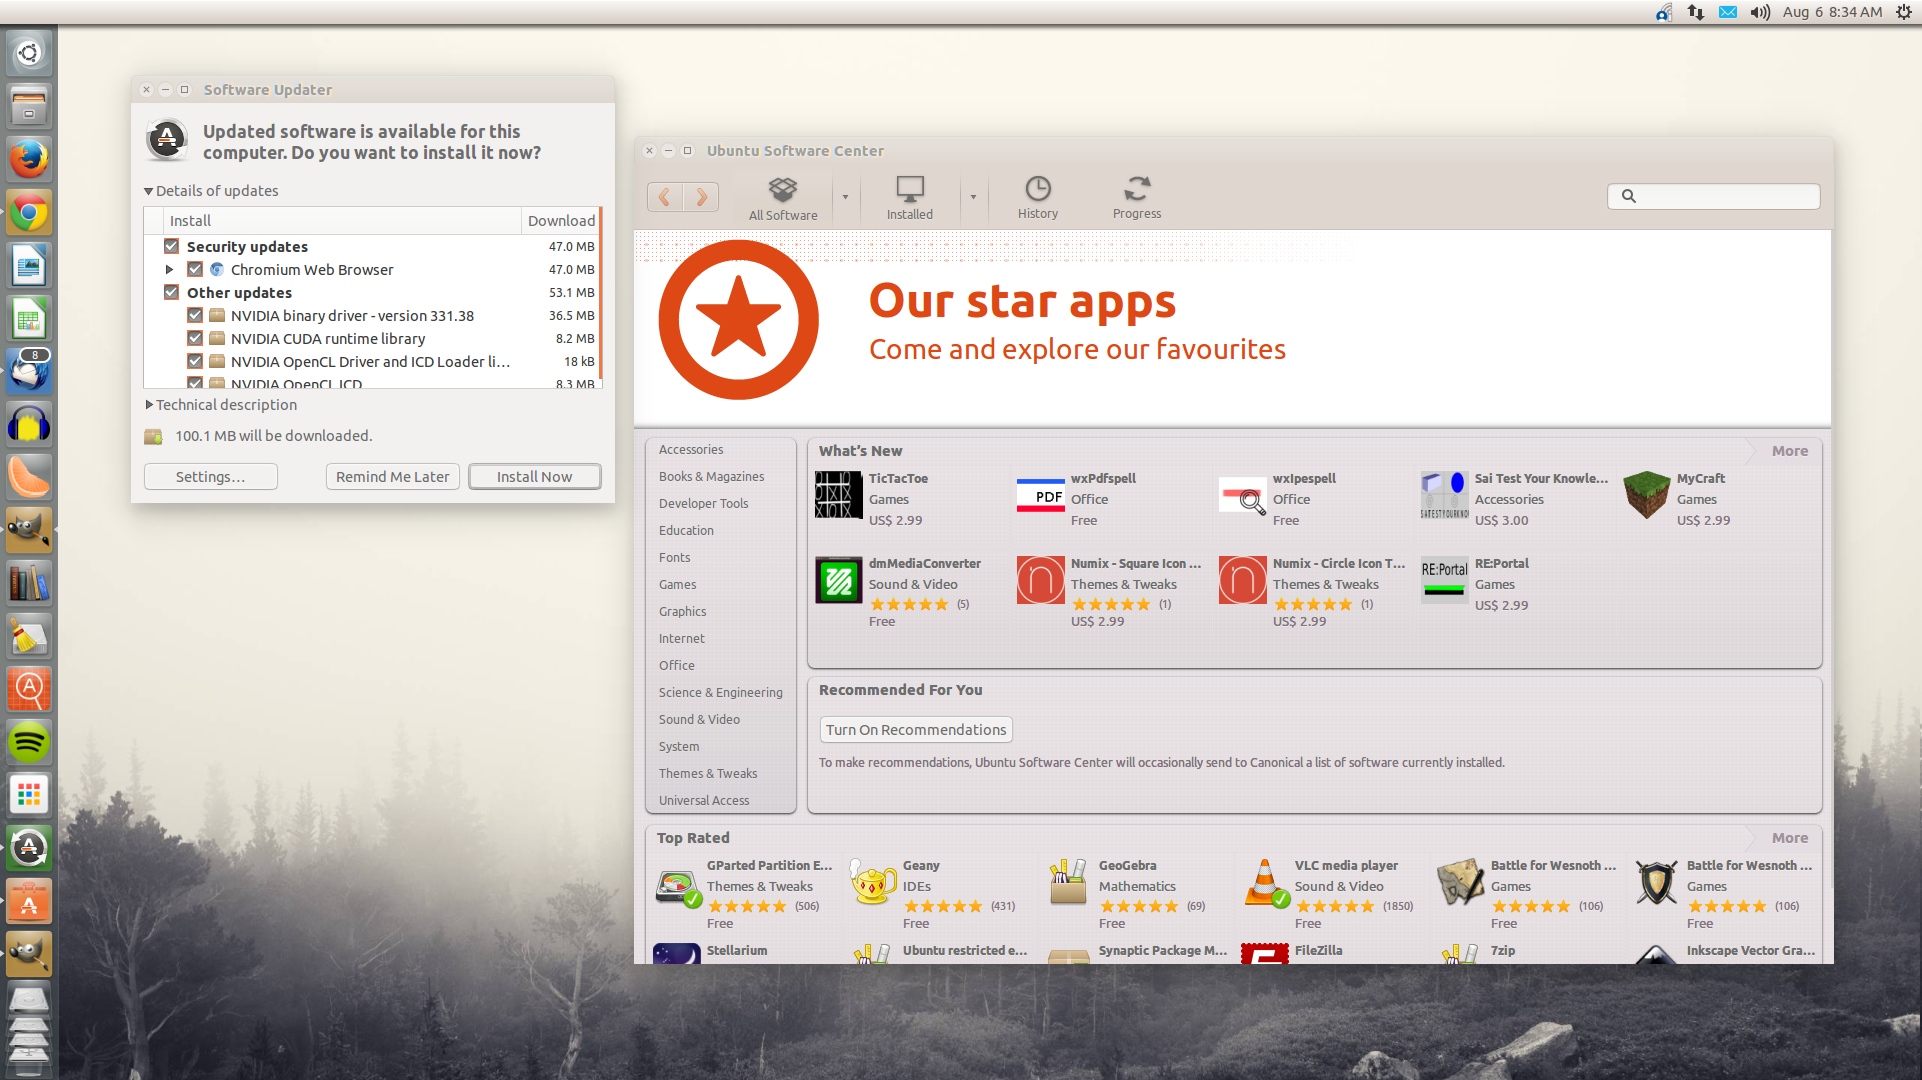 Ubuntu software center screenshot